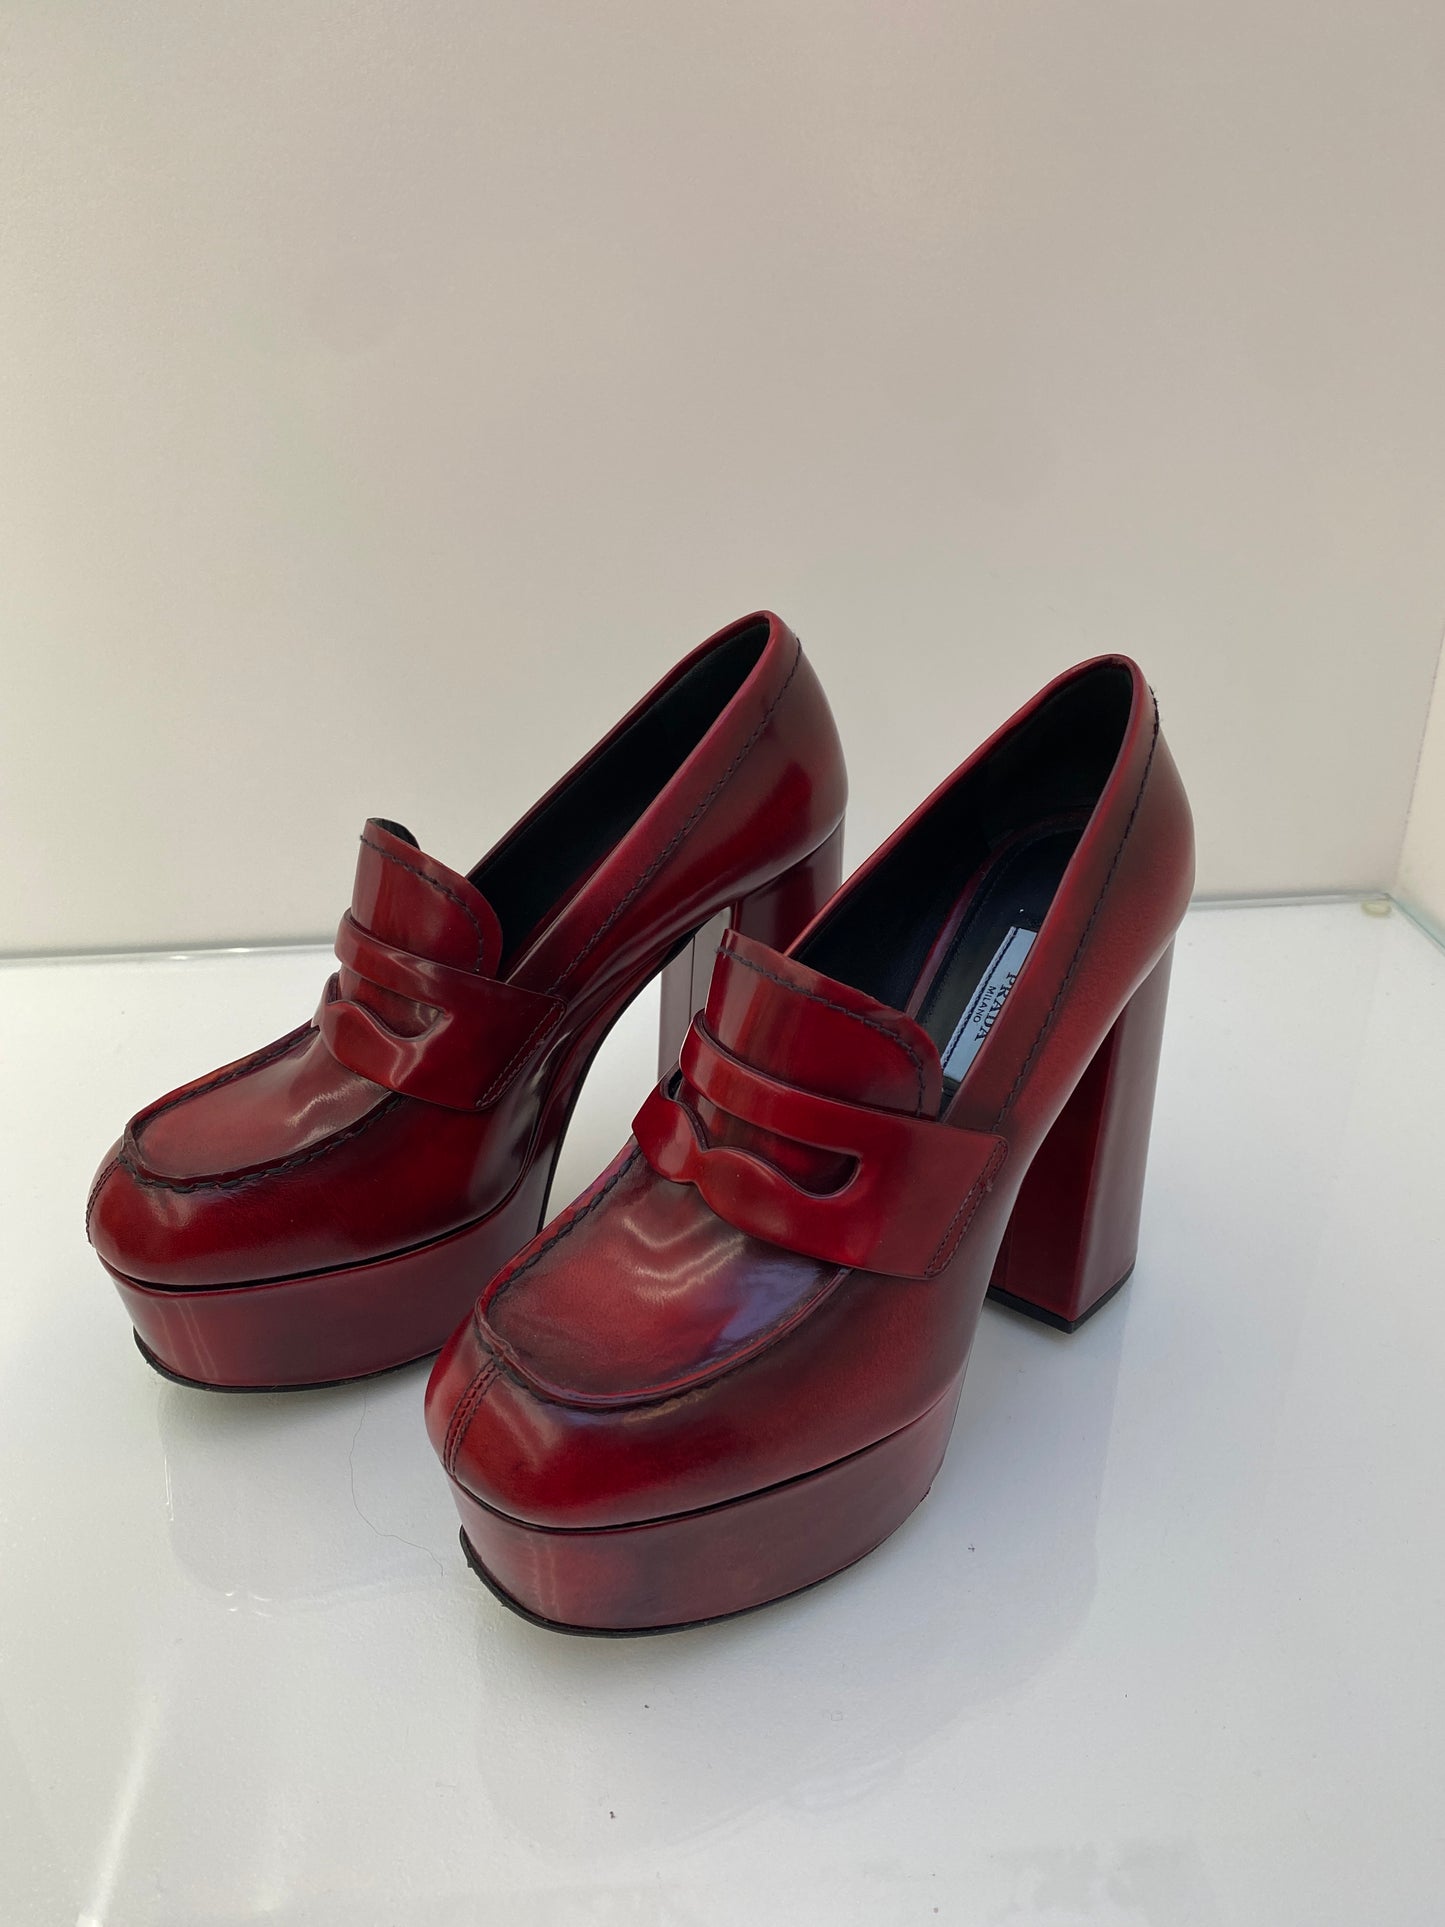 Prada Red Leather Block Heels, 37.5